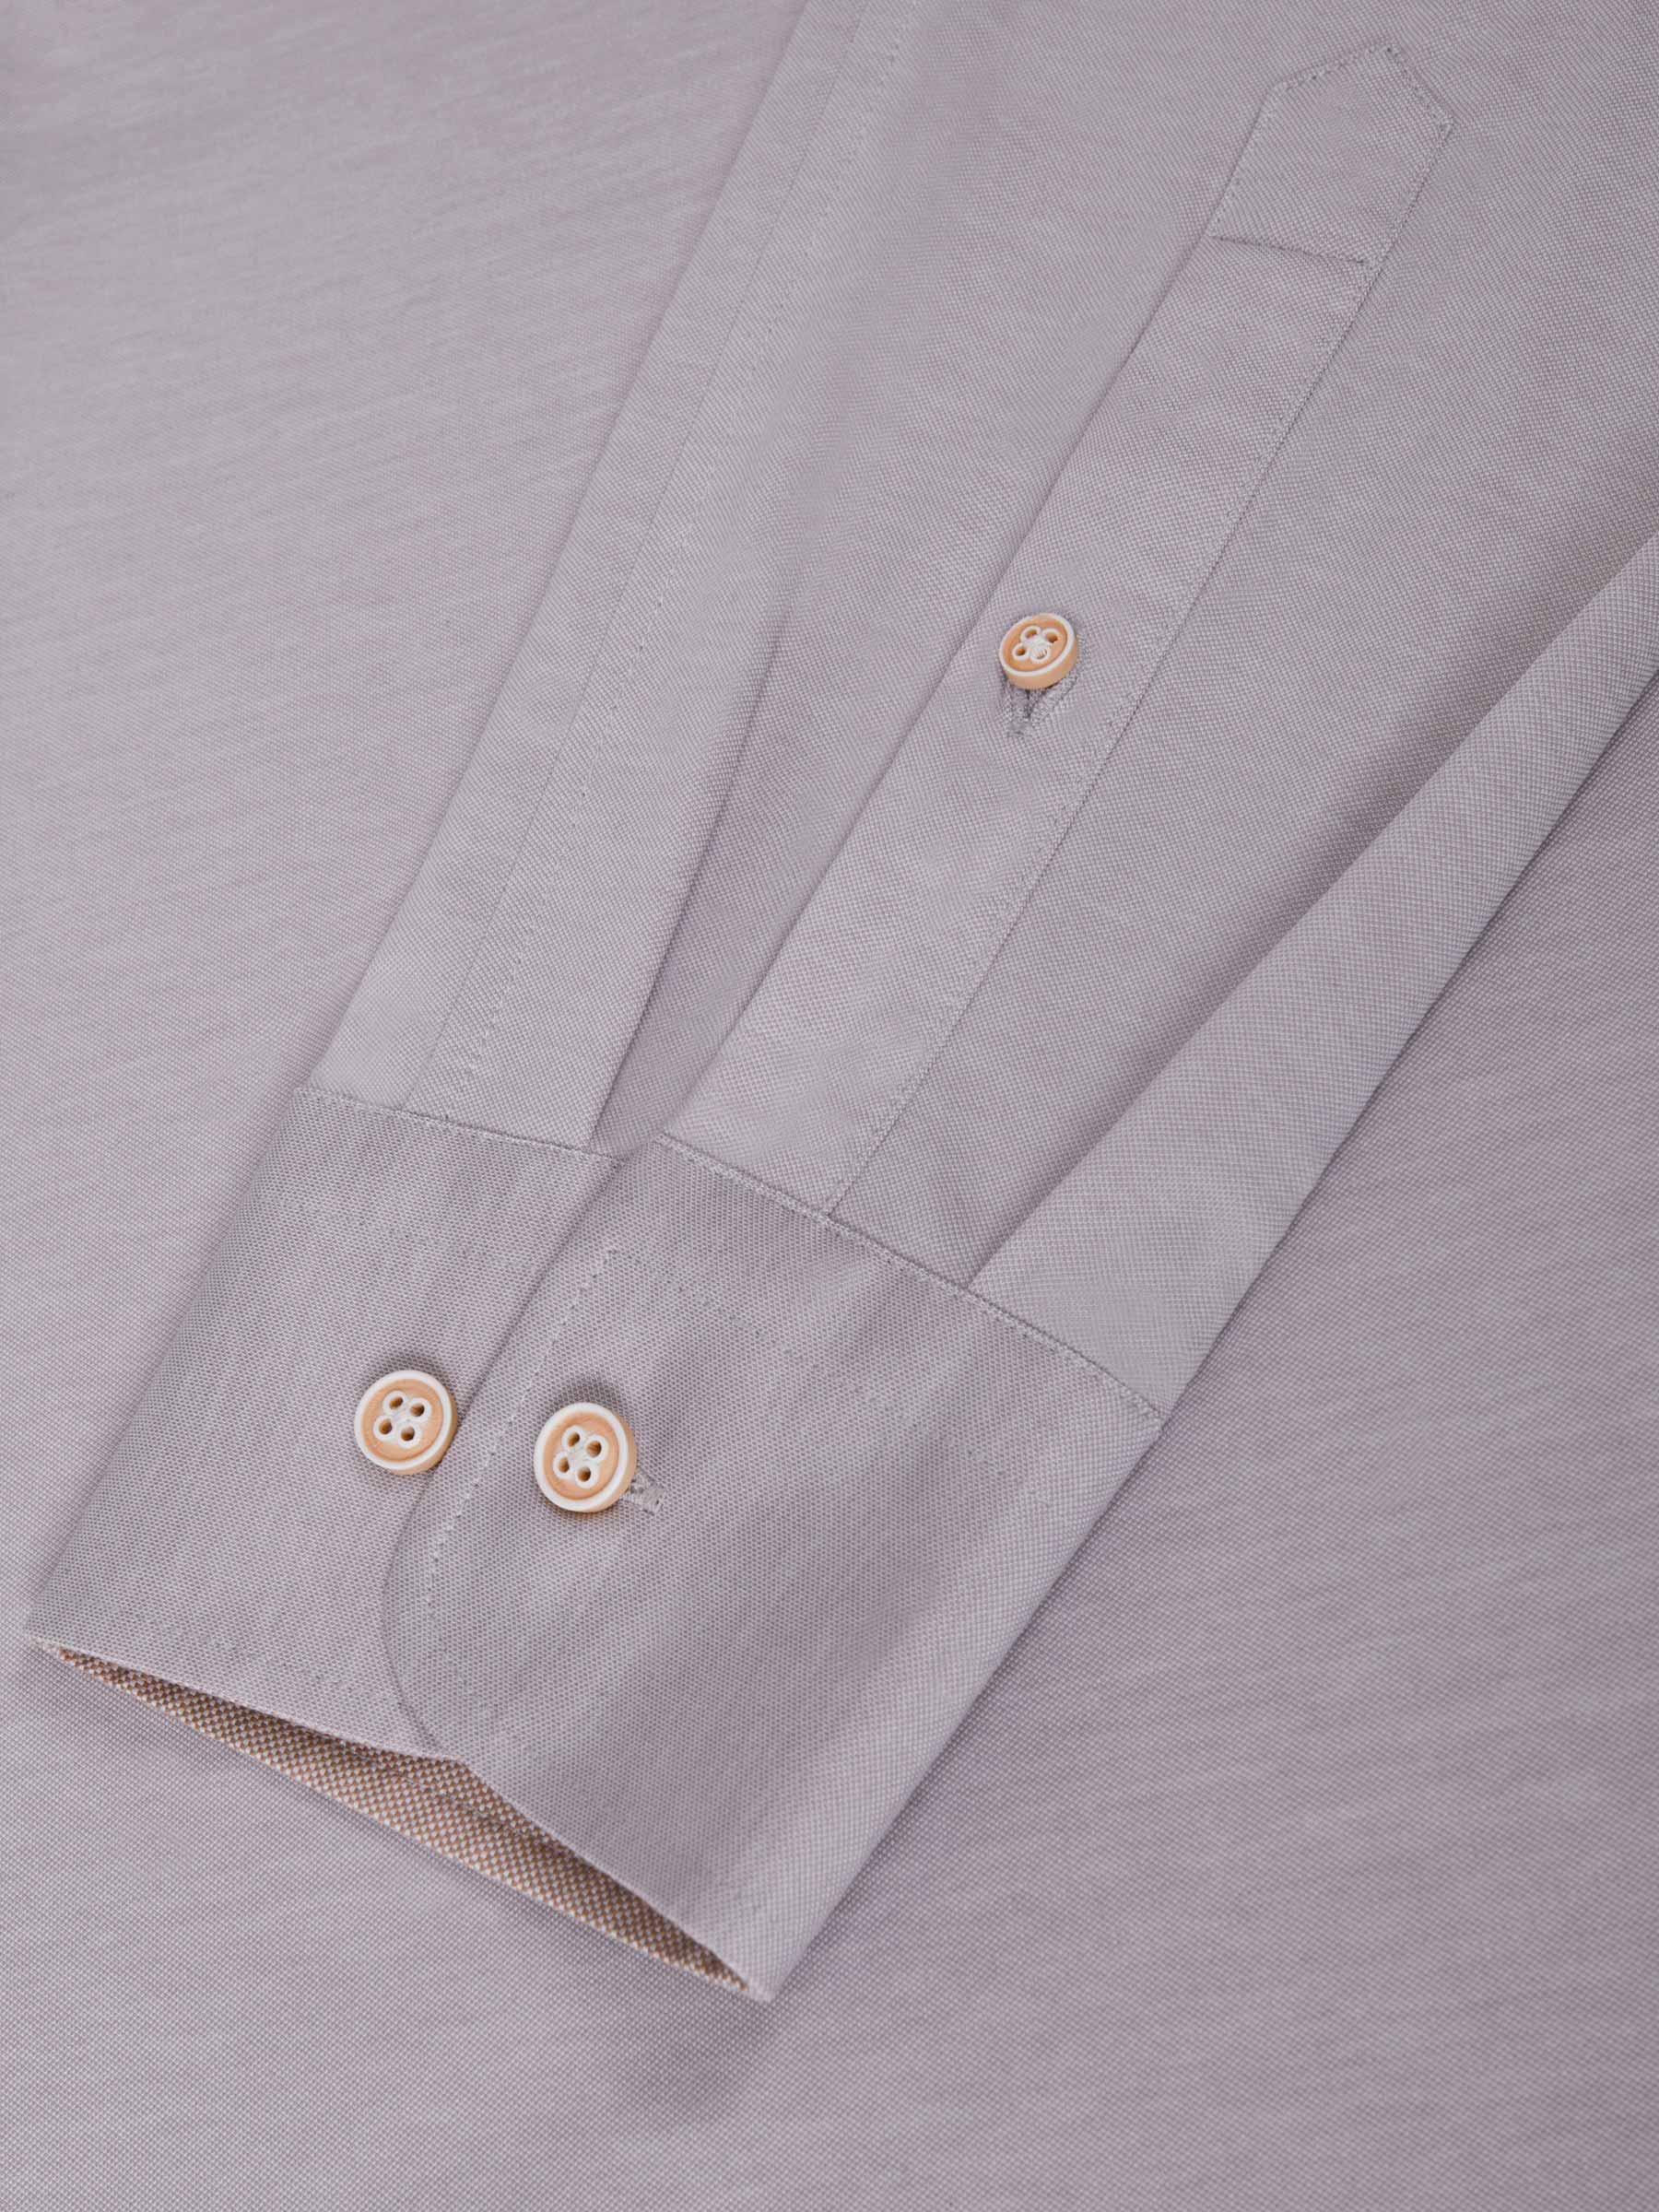 Jucinto Cut Away Collar Long sleeve Shirt Grey